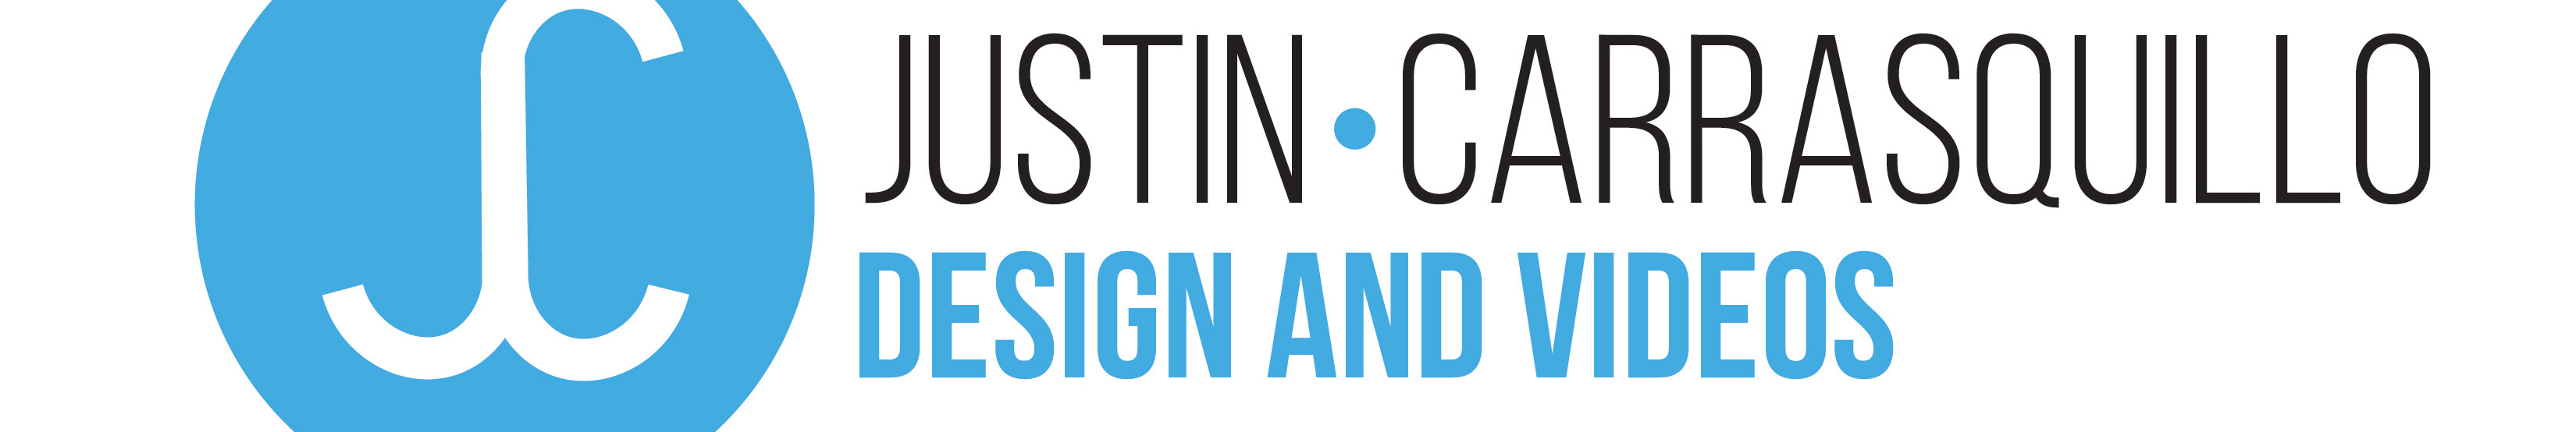 Justin Carrasquillo's profile banner